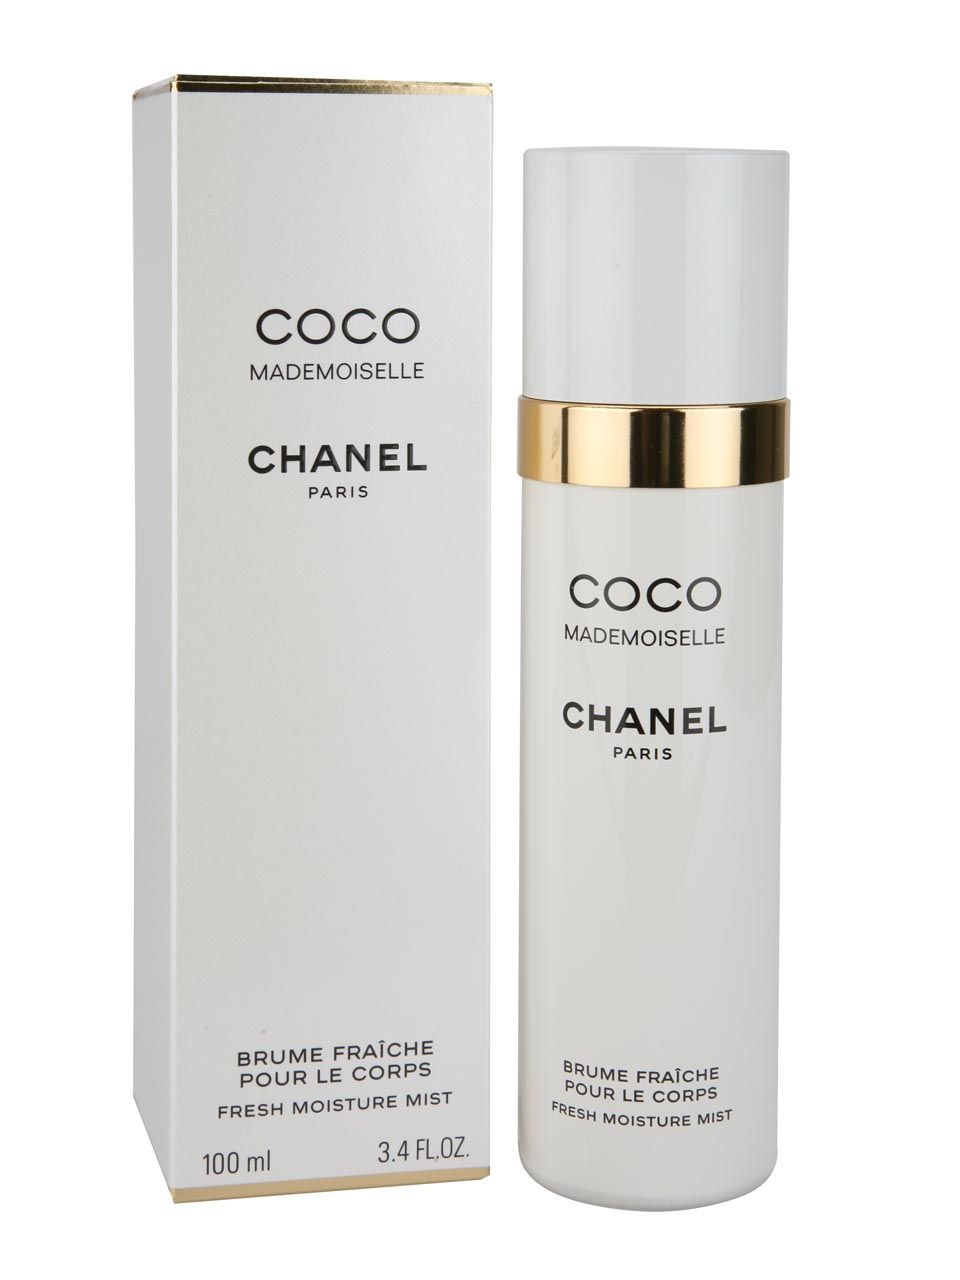 Chanel Coco Mademoiselle Intense duty free парфюмерия парфюмерия из duty  free в интернет магазине Discount City